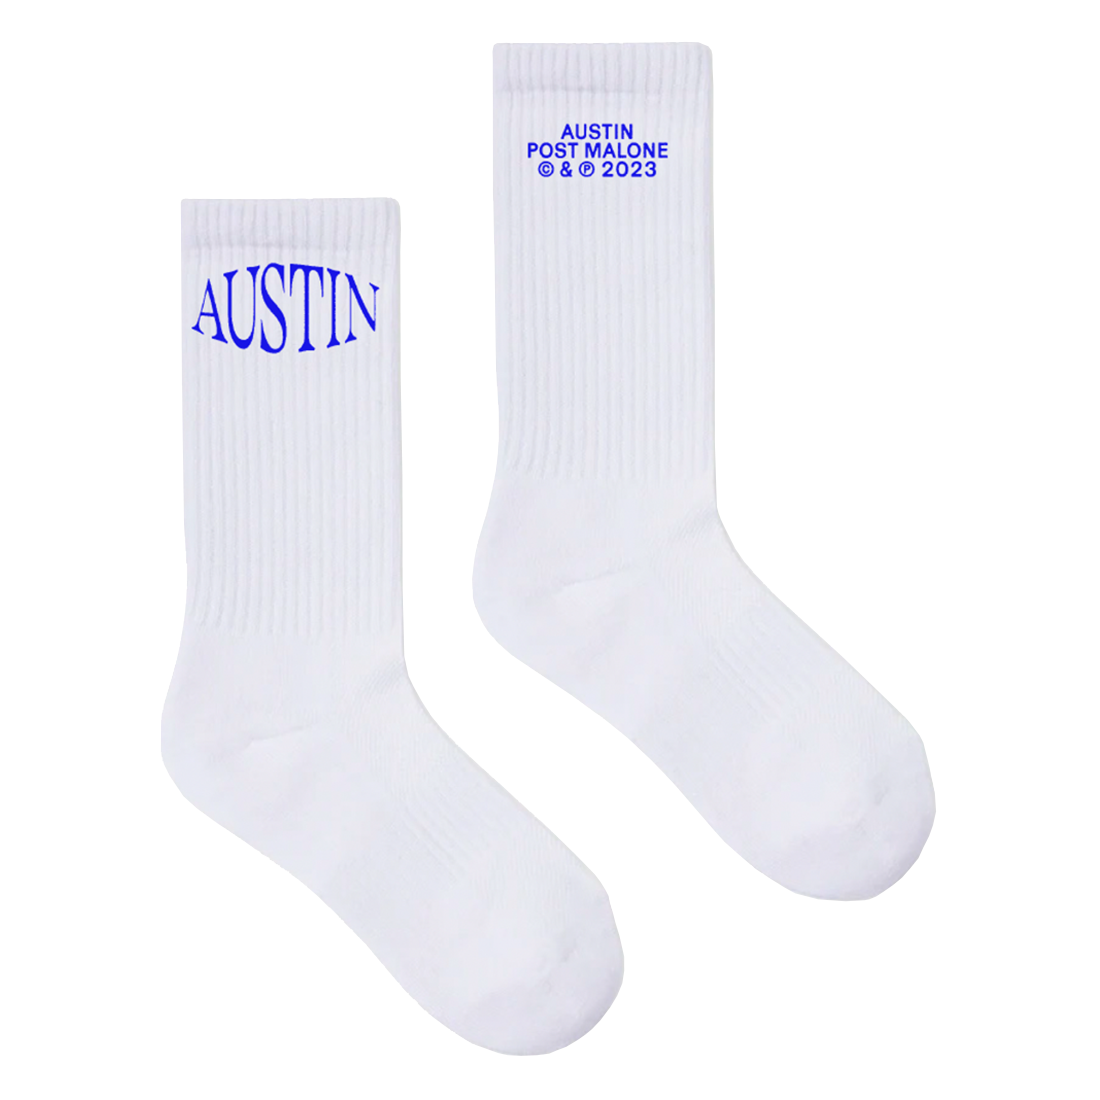 Post Malone - Austin Socks